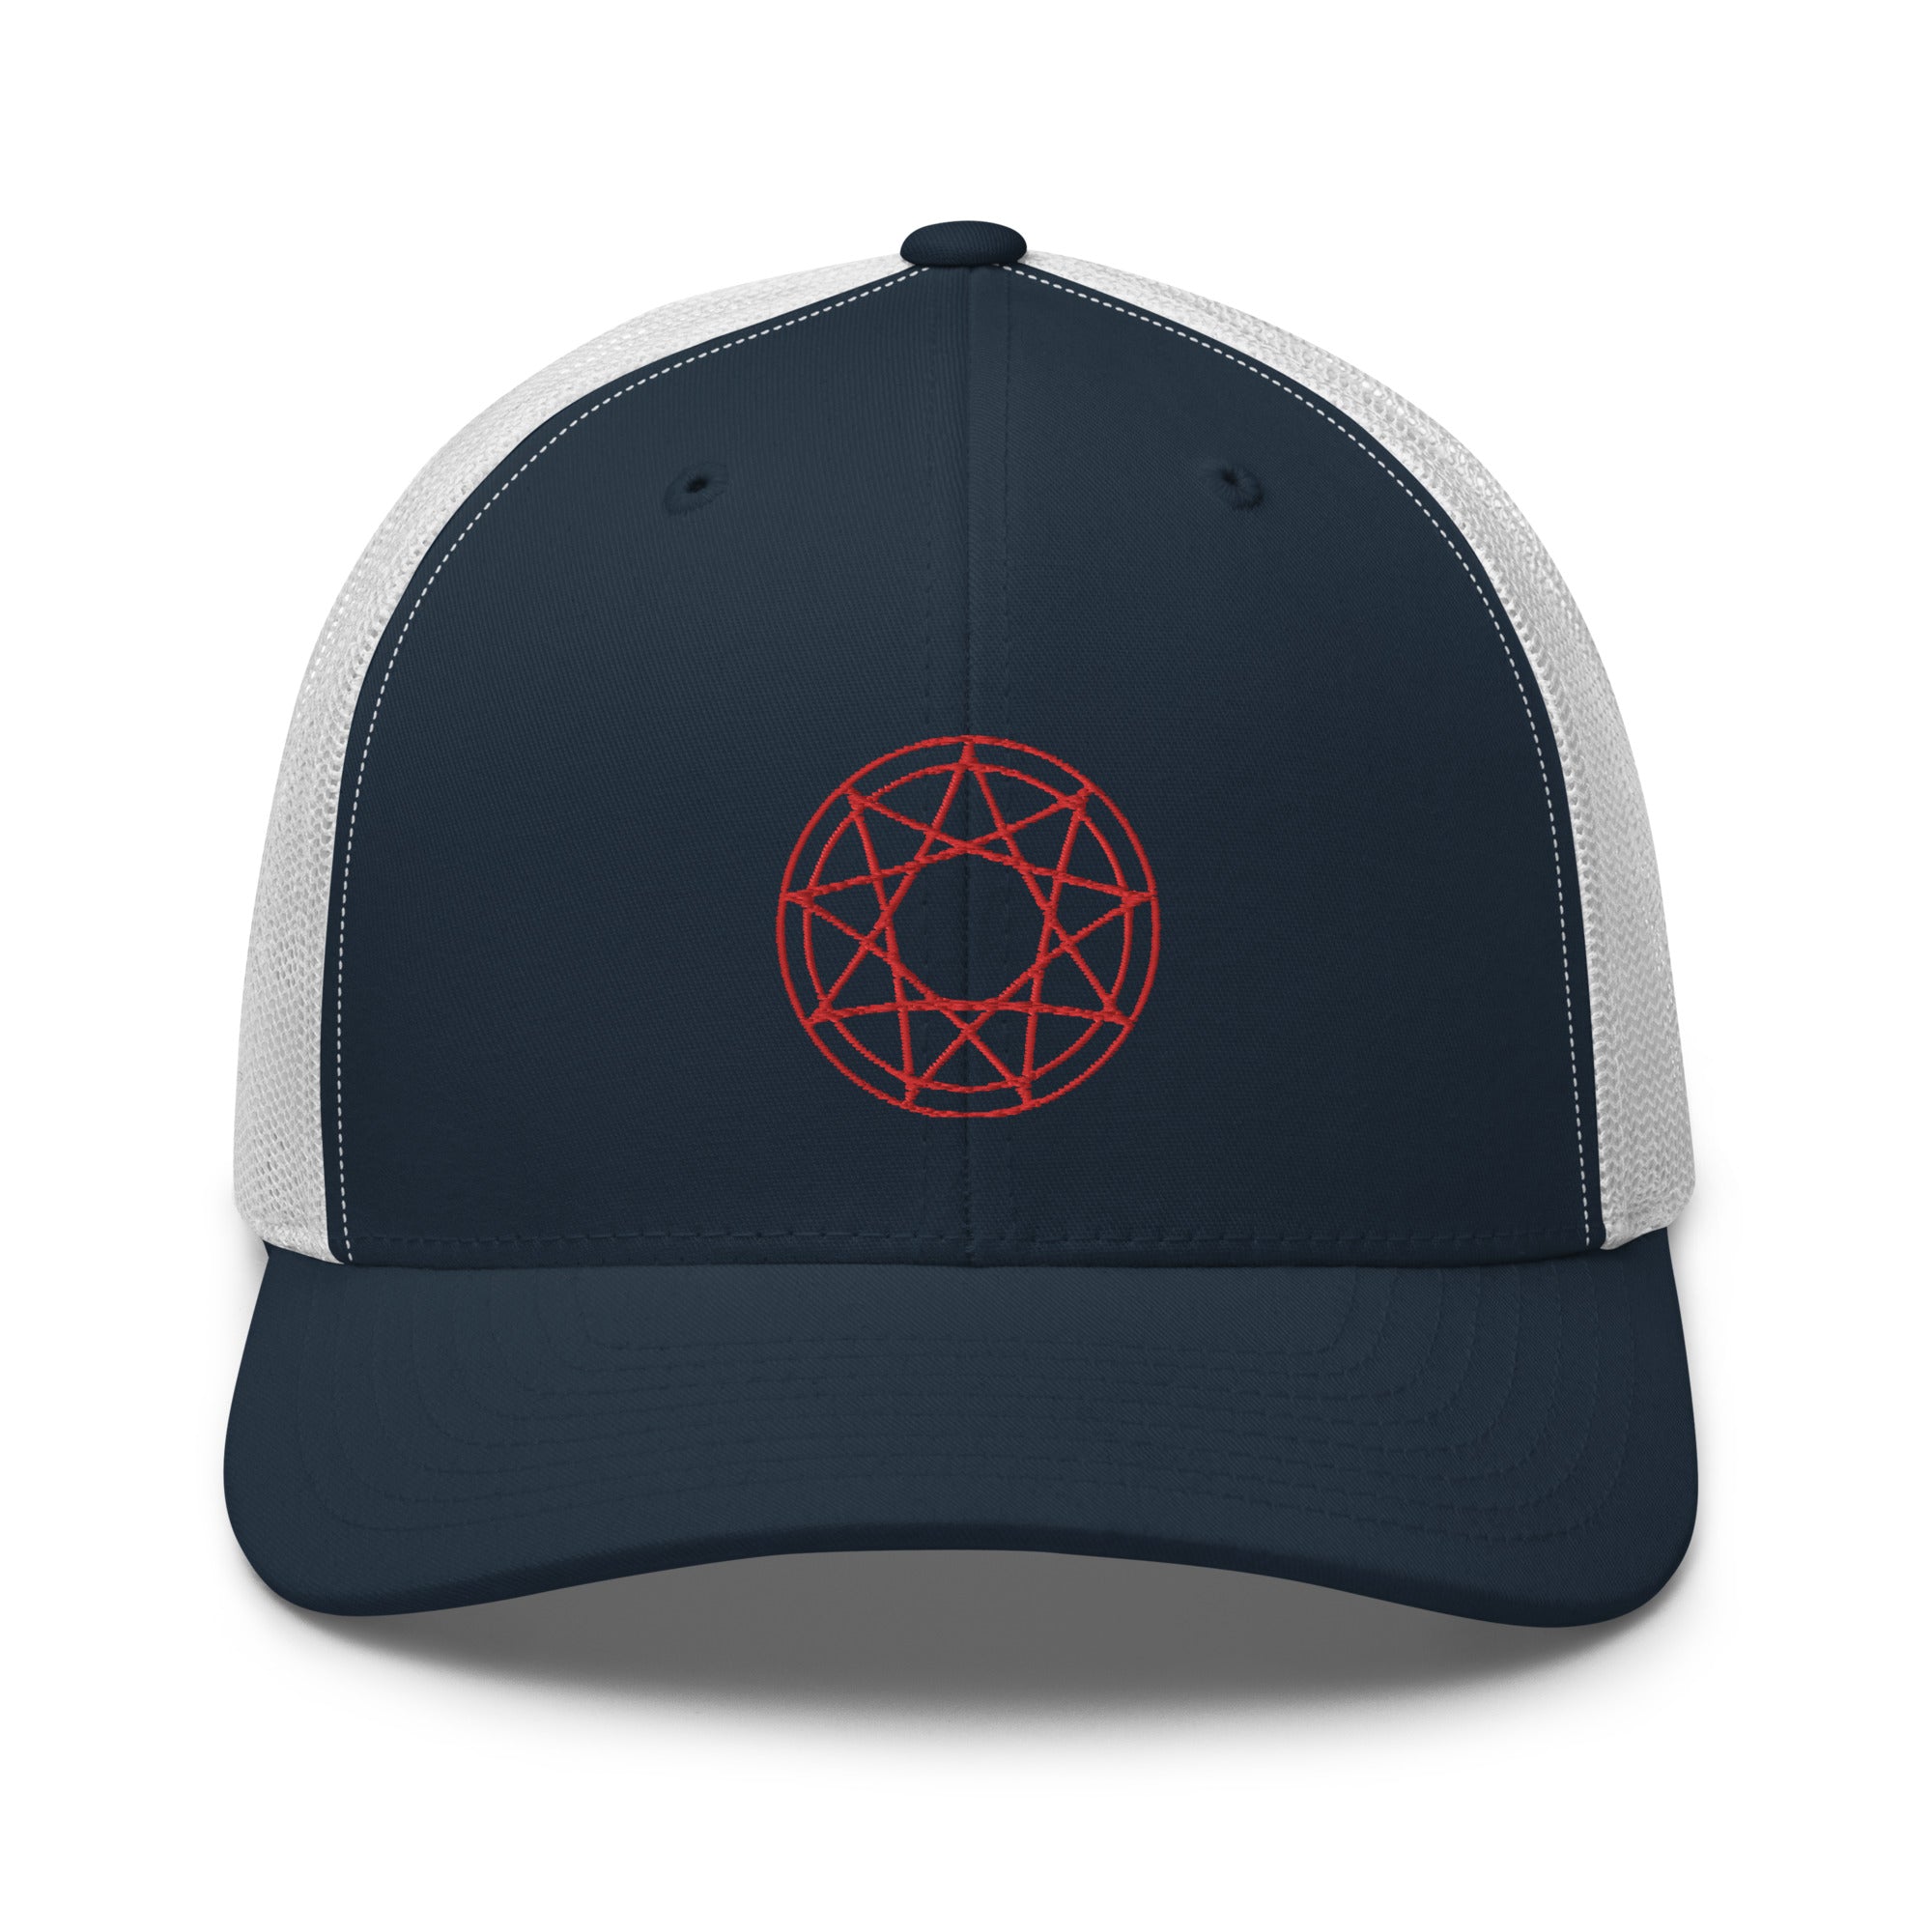 Red 9 Point Star Pentagram Occult Symbol Embroidered Retro Trucker Cap Snapback Hat